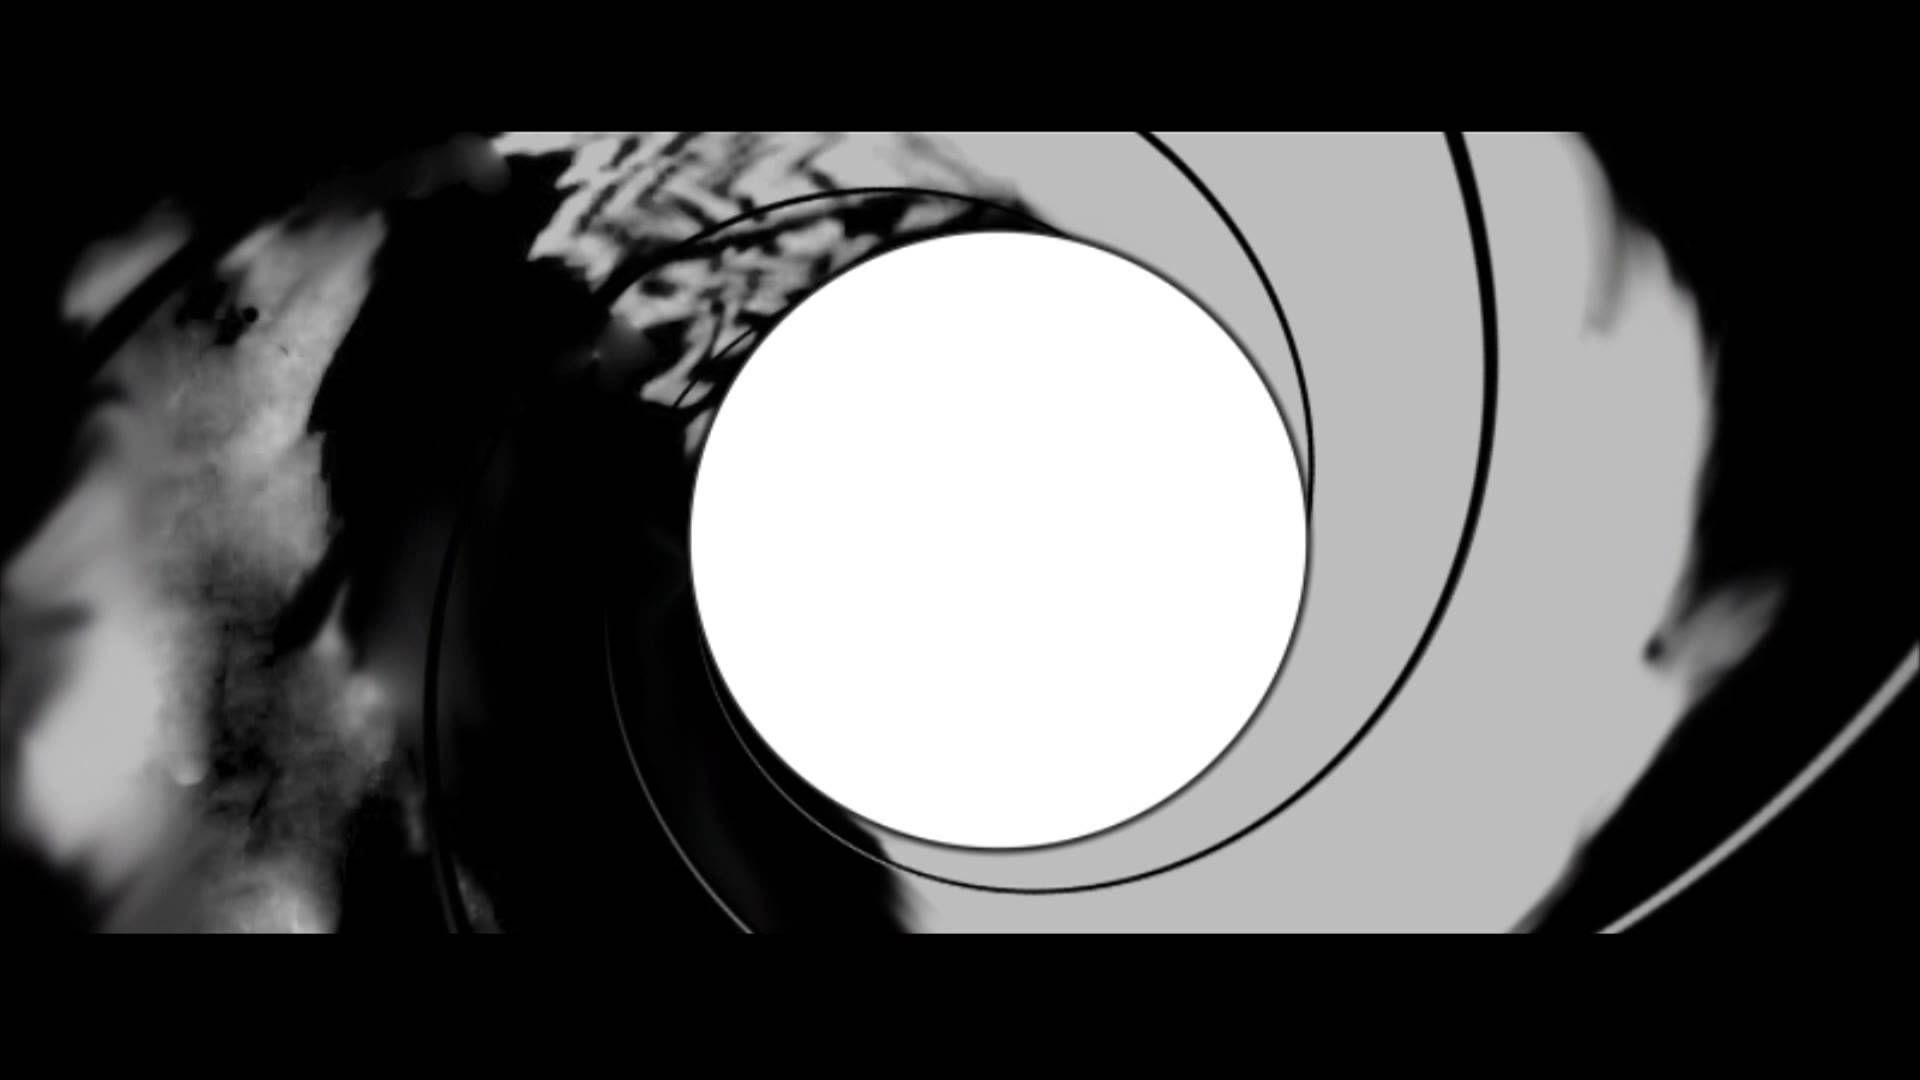 James Bond Style Gun Barrel Logo